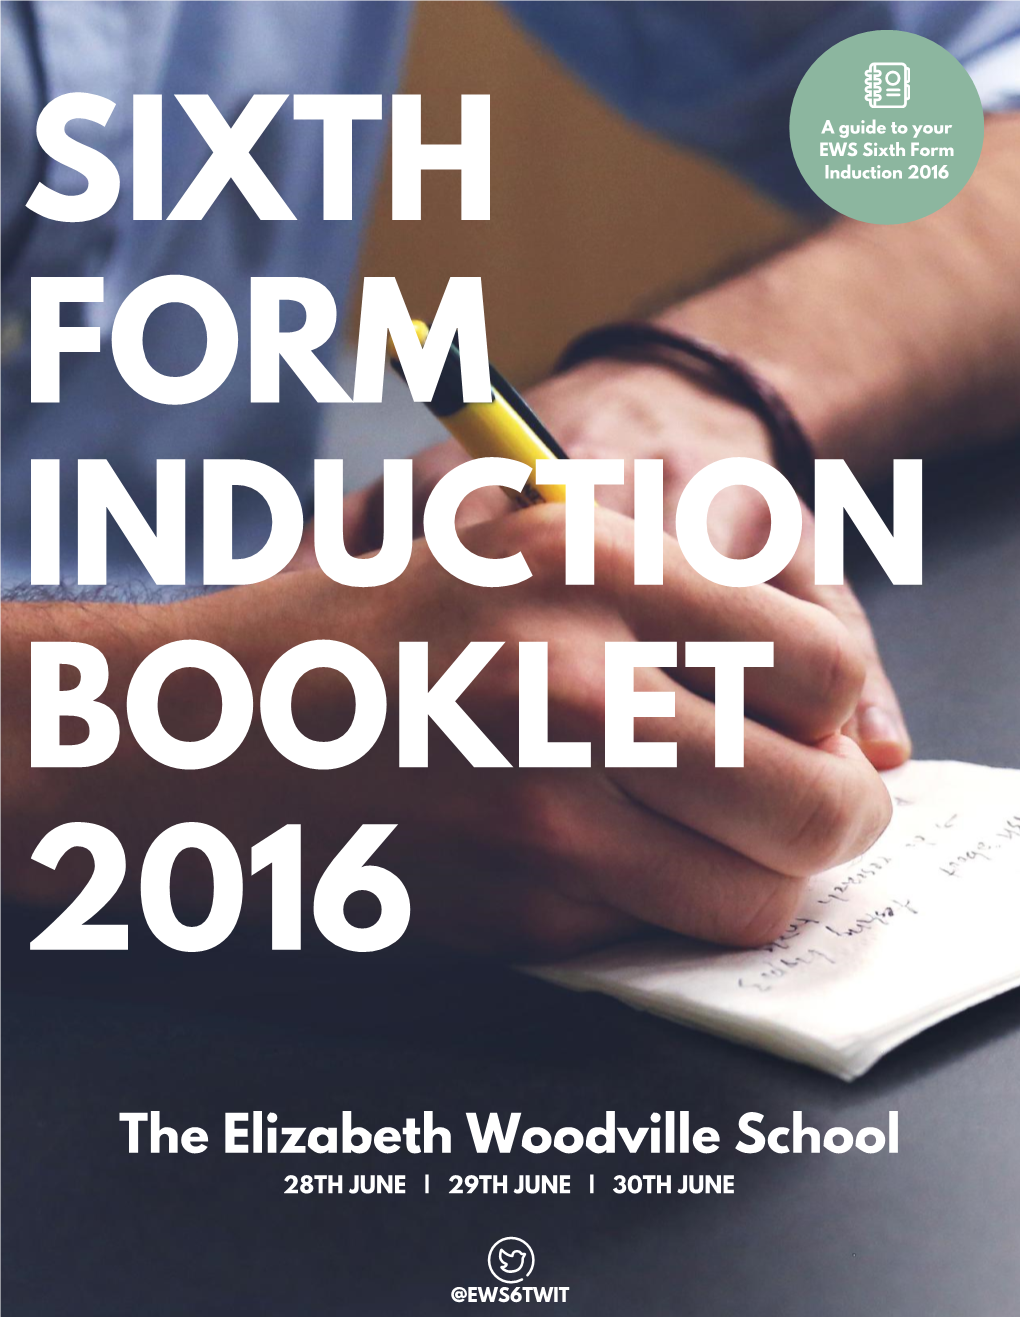 The Elizabeth Woodville School 28TH JUNE | 29TH JUNE | 30TH JUNE